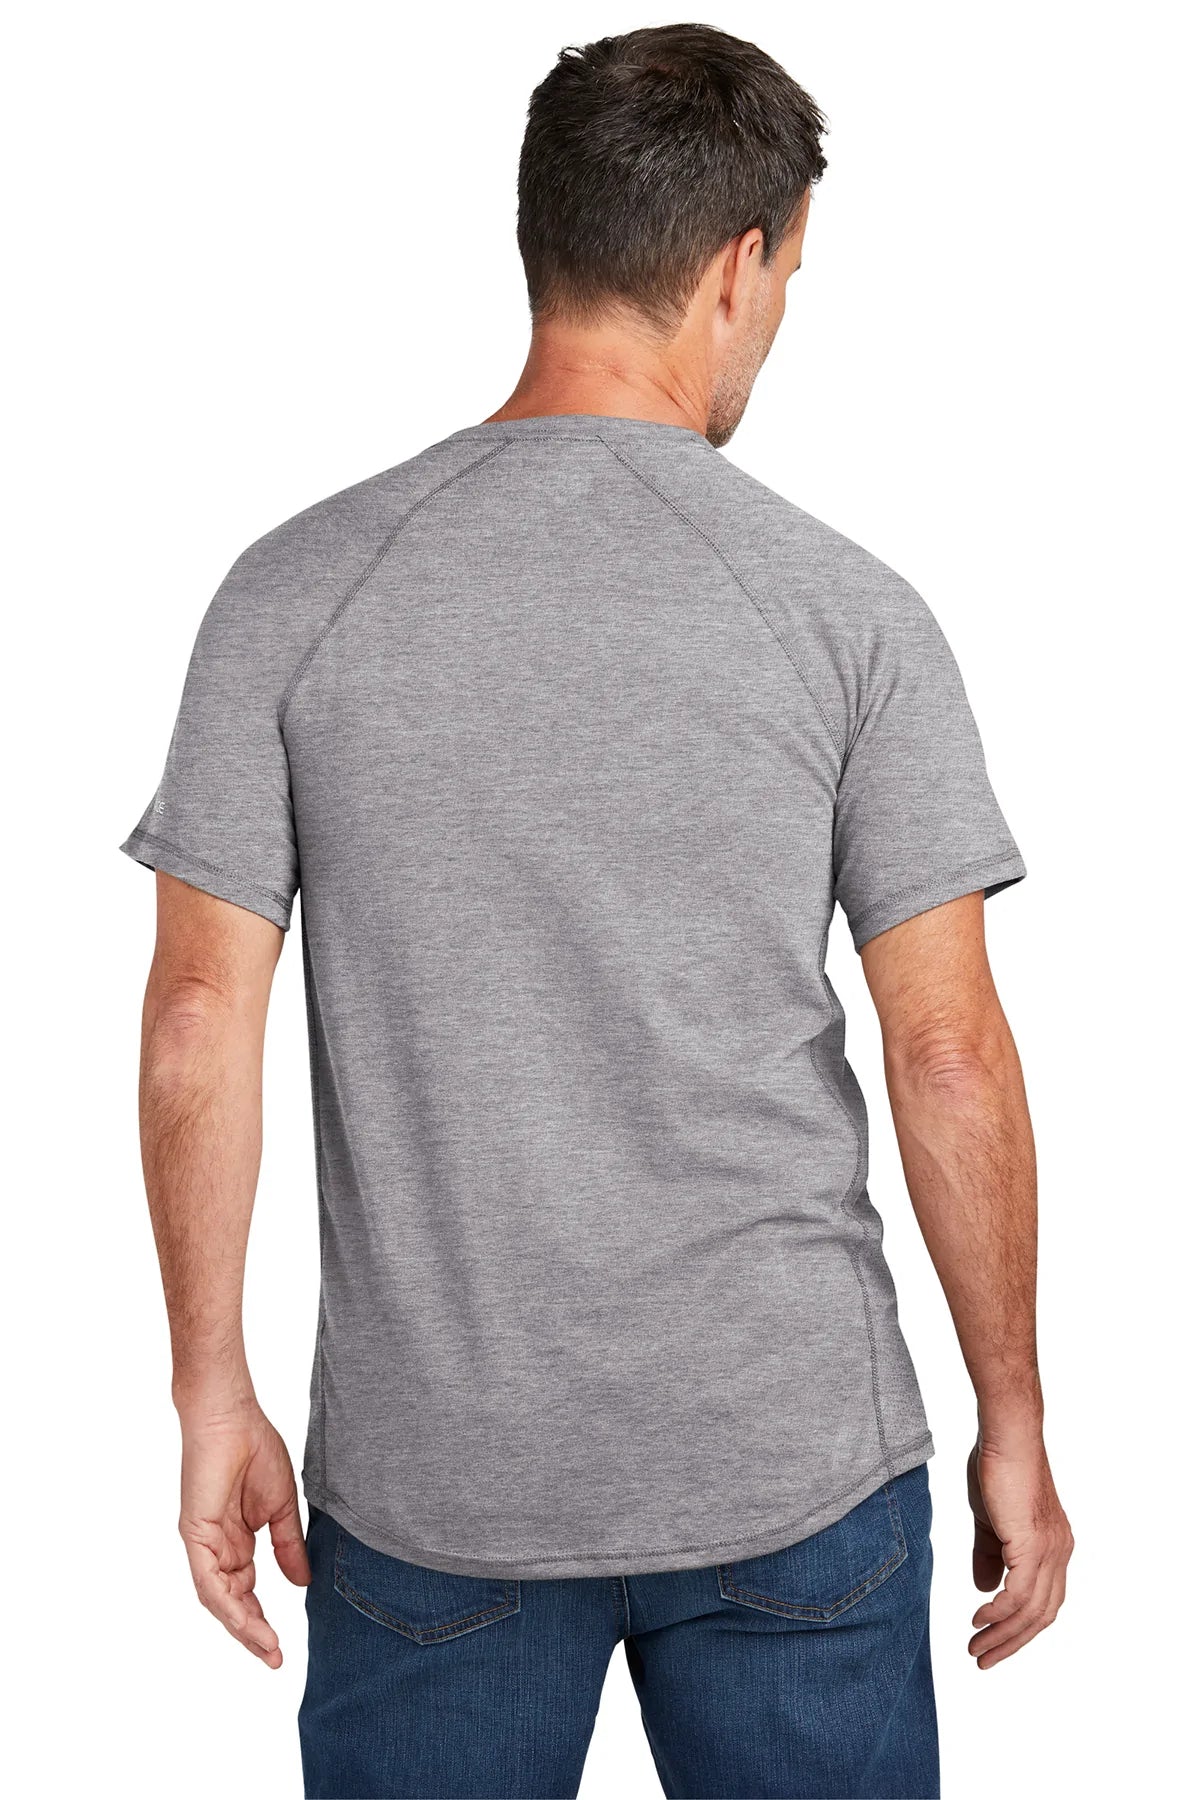 Carhartt Men's Force Cotton Delmont Short-Sleeve T-Shirt - Heather Gray,4XL